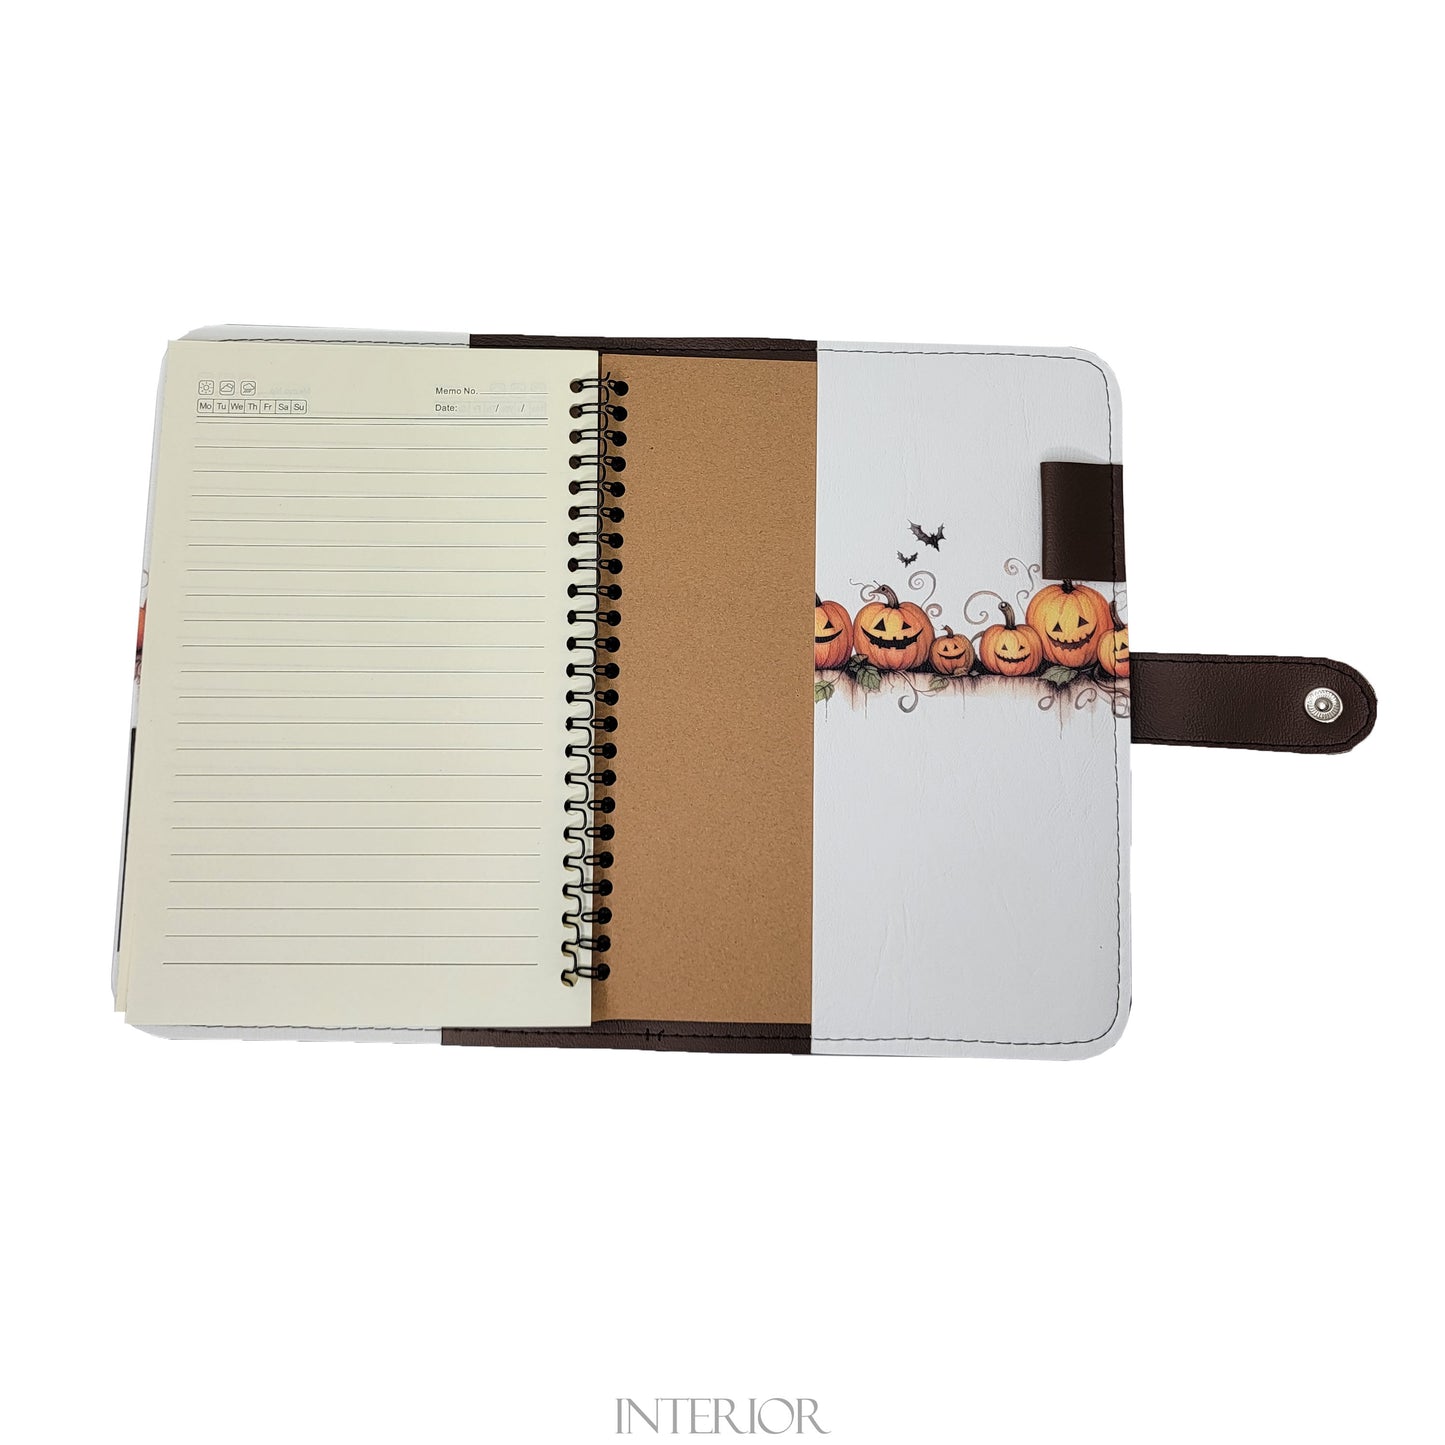 Jack-o'-lantern- Notebook & Cover